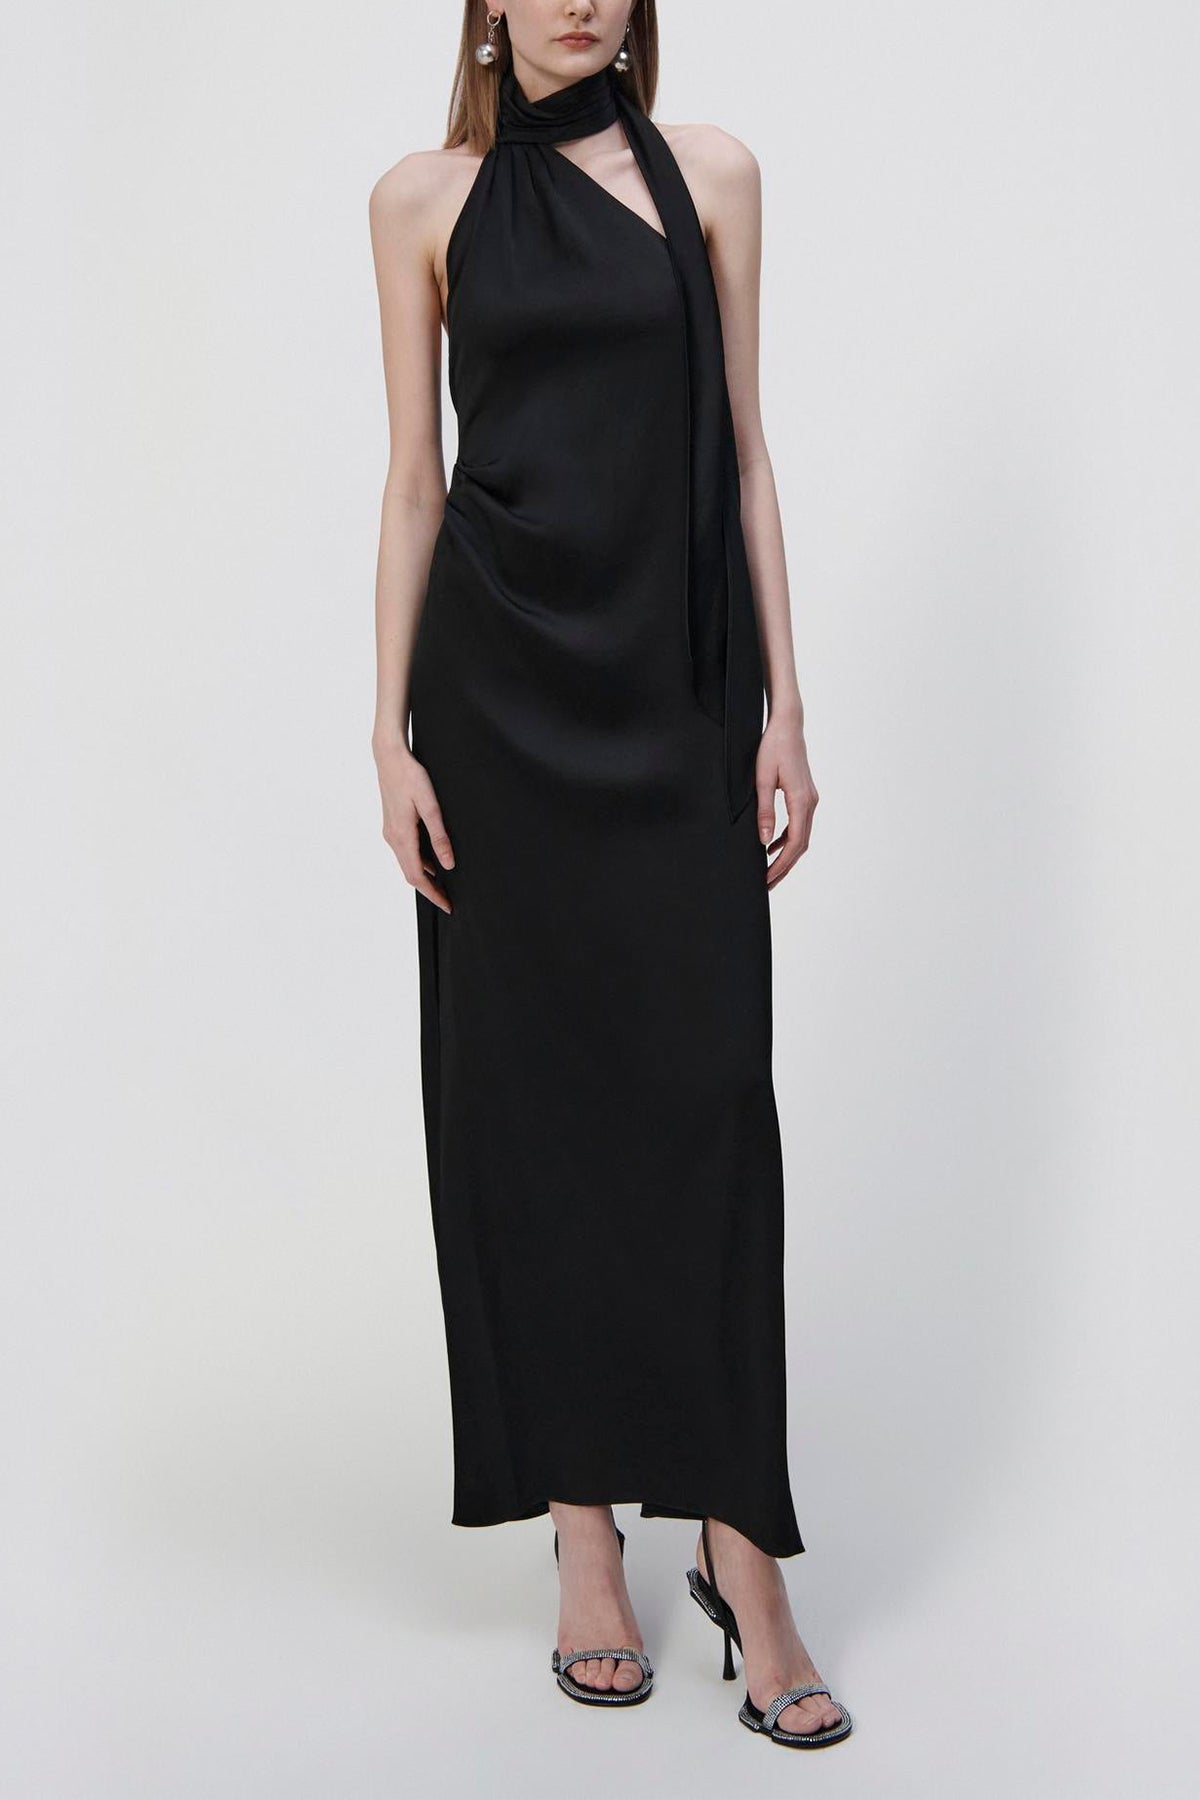 Vittoria Draped Scarf Dress in Black - shop-olivia.com